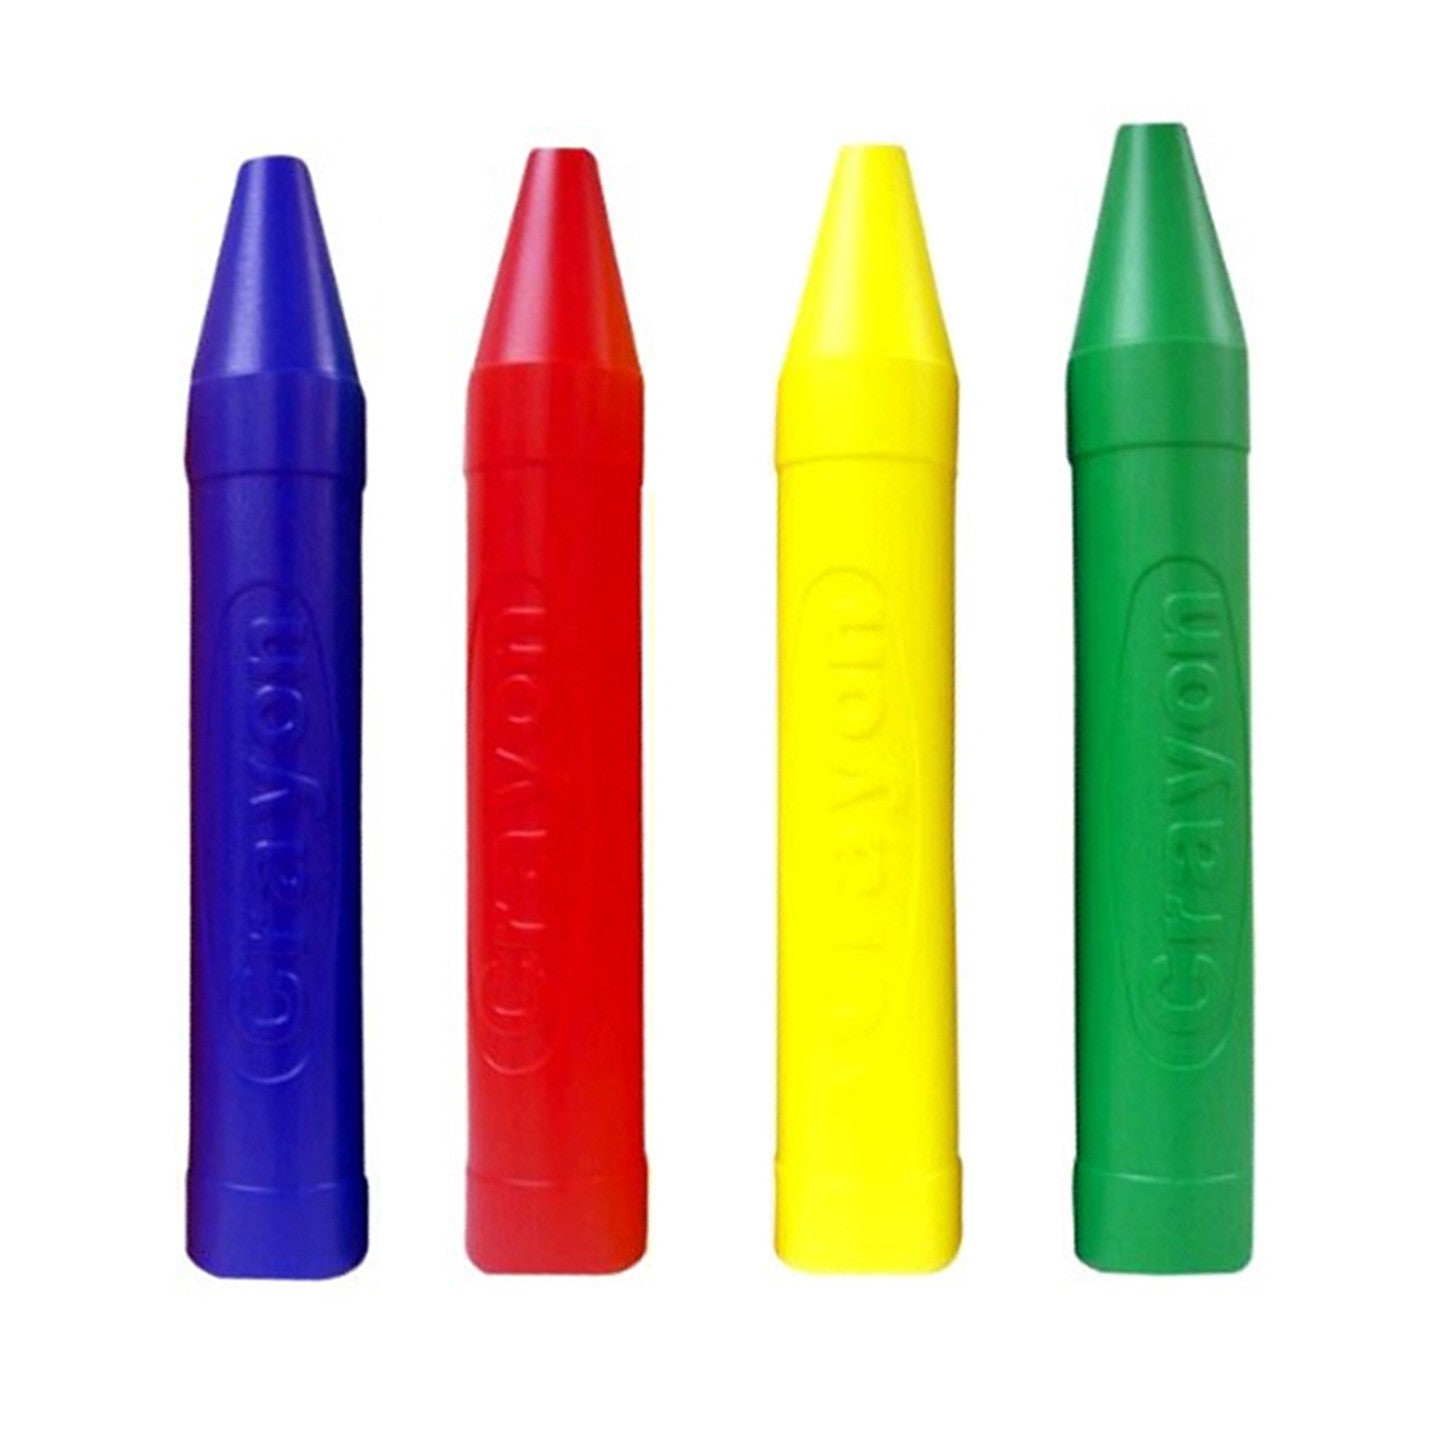 Jumbo Plastic Crayon Combo Set of 4 - (Blue, Red, Yellow, Green)